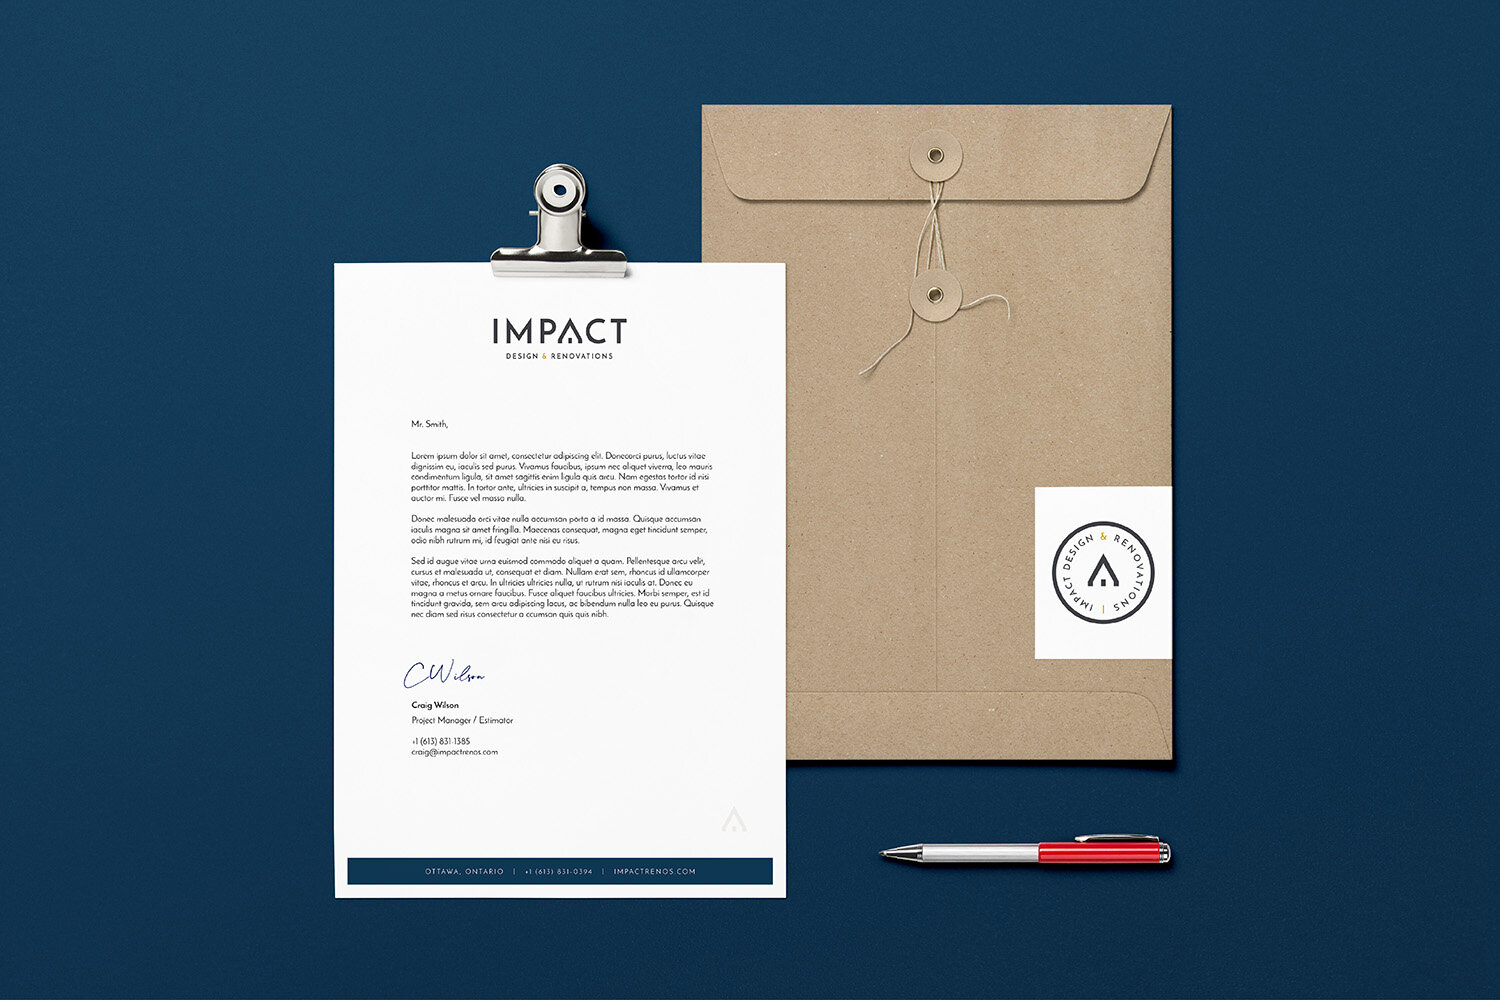 02-impact-letterhead-1500x1000.jpg